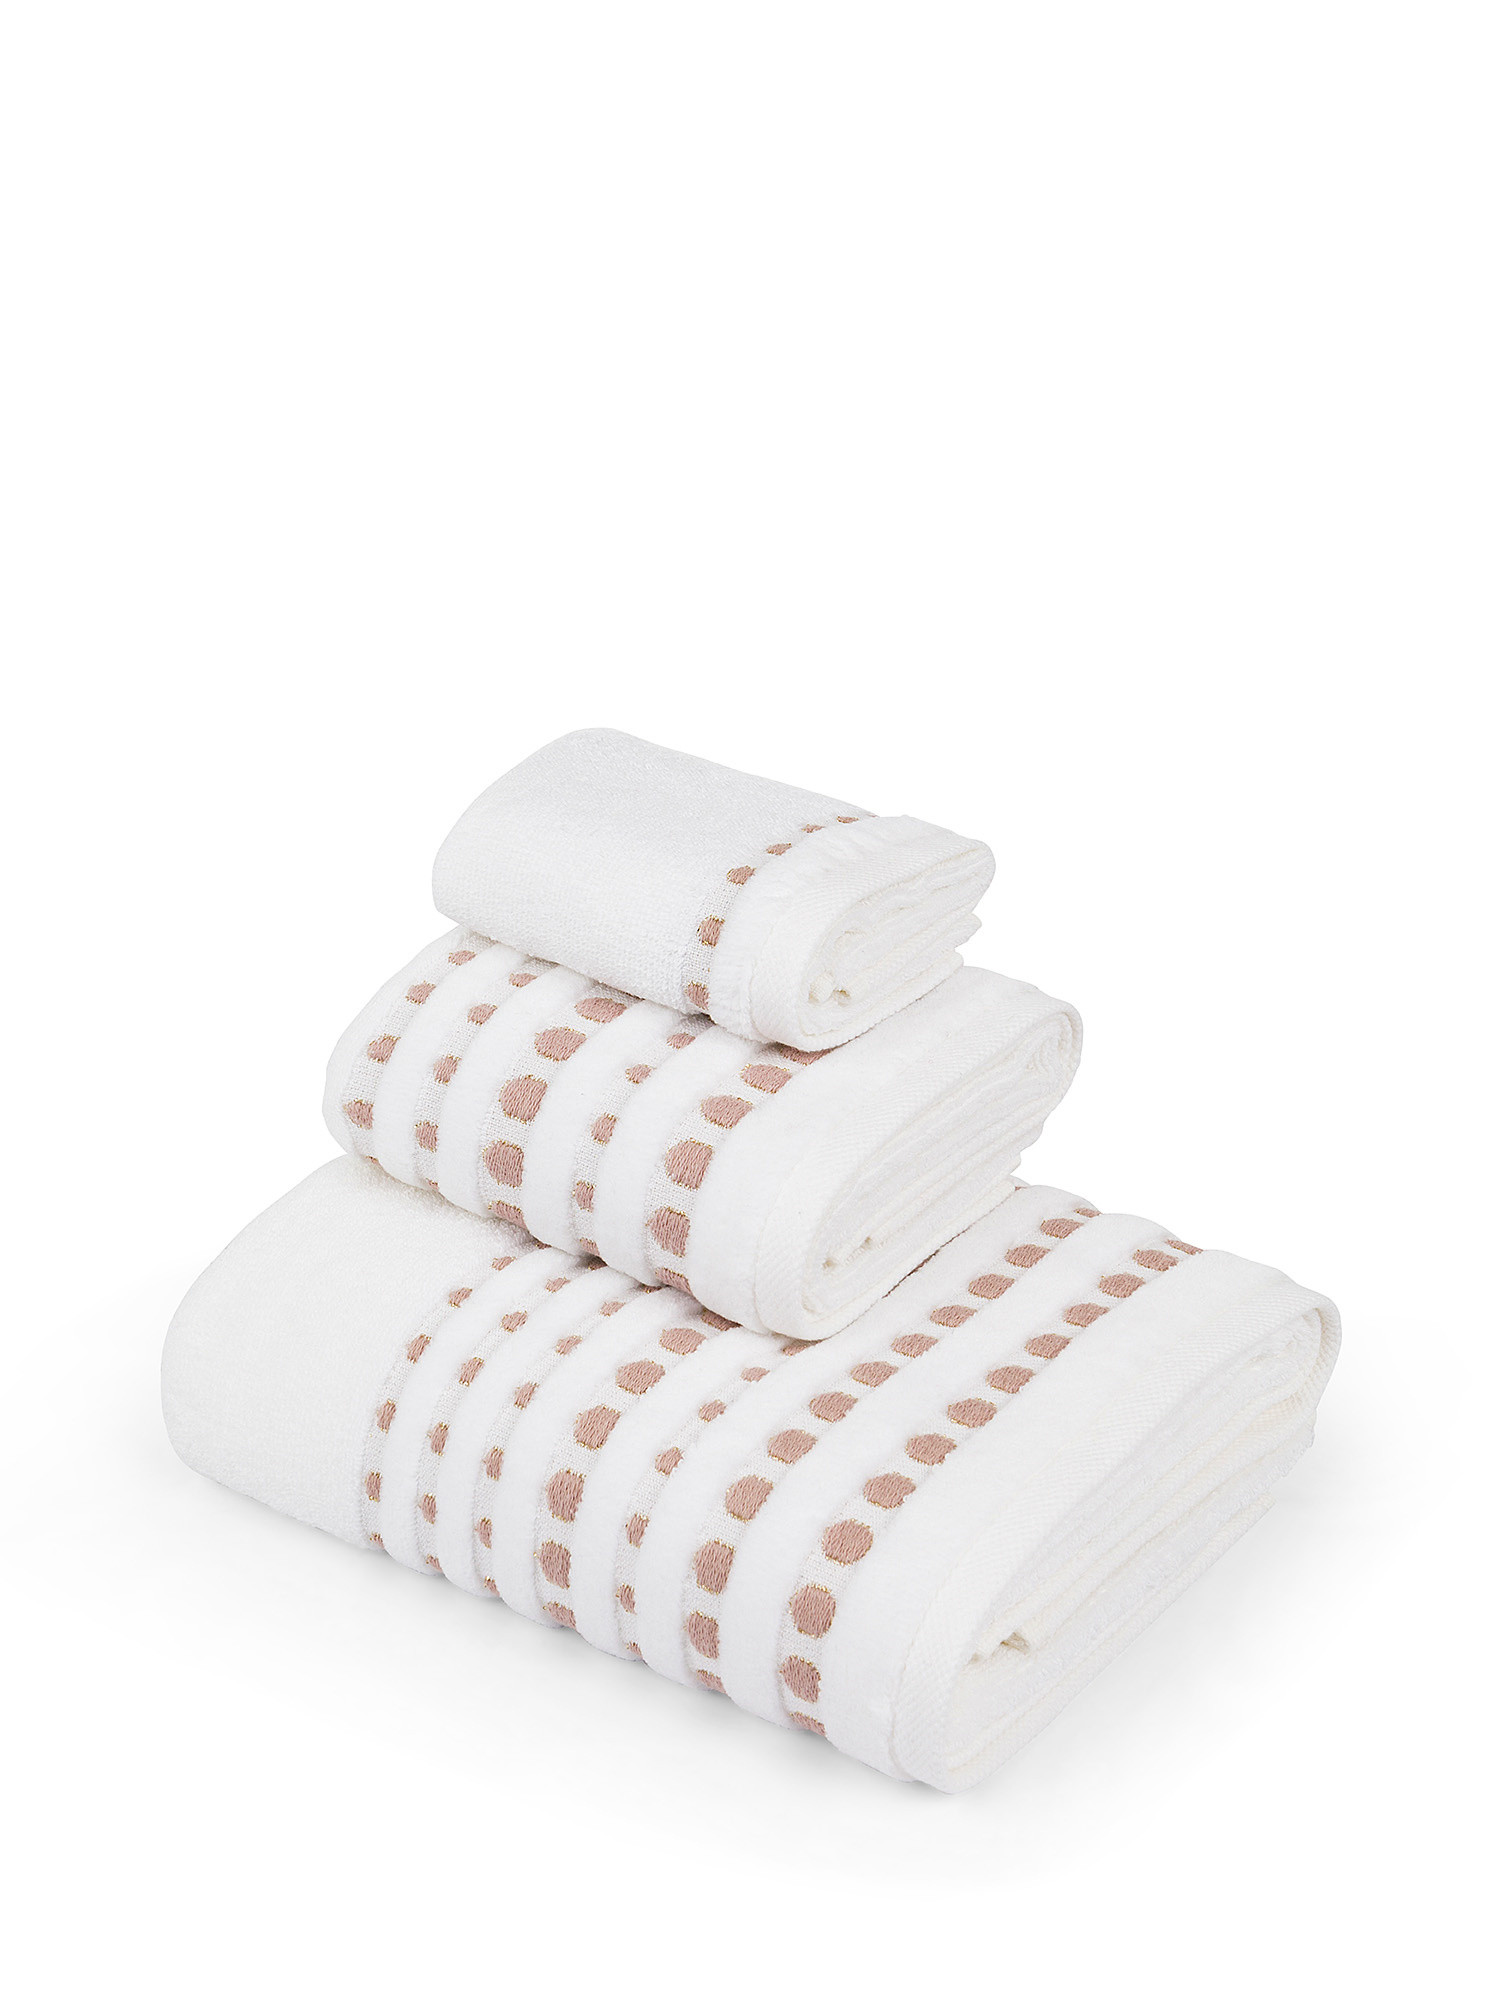 Asciugamano cotone bordo ricamato Portofino, Bianco, large image number 0